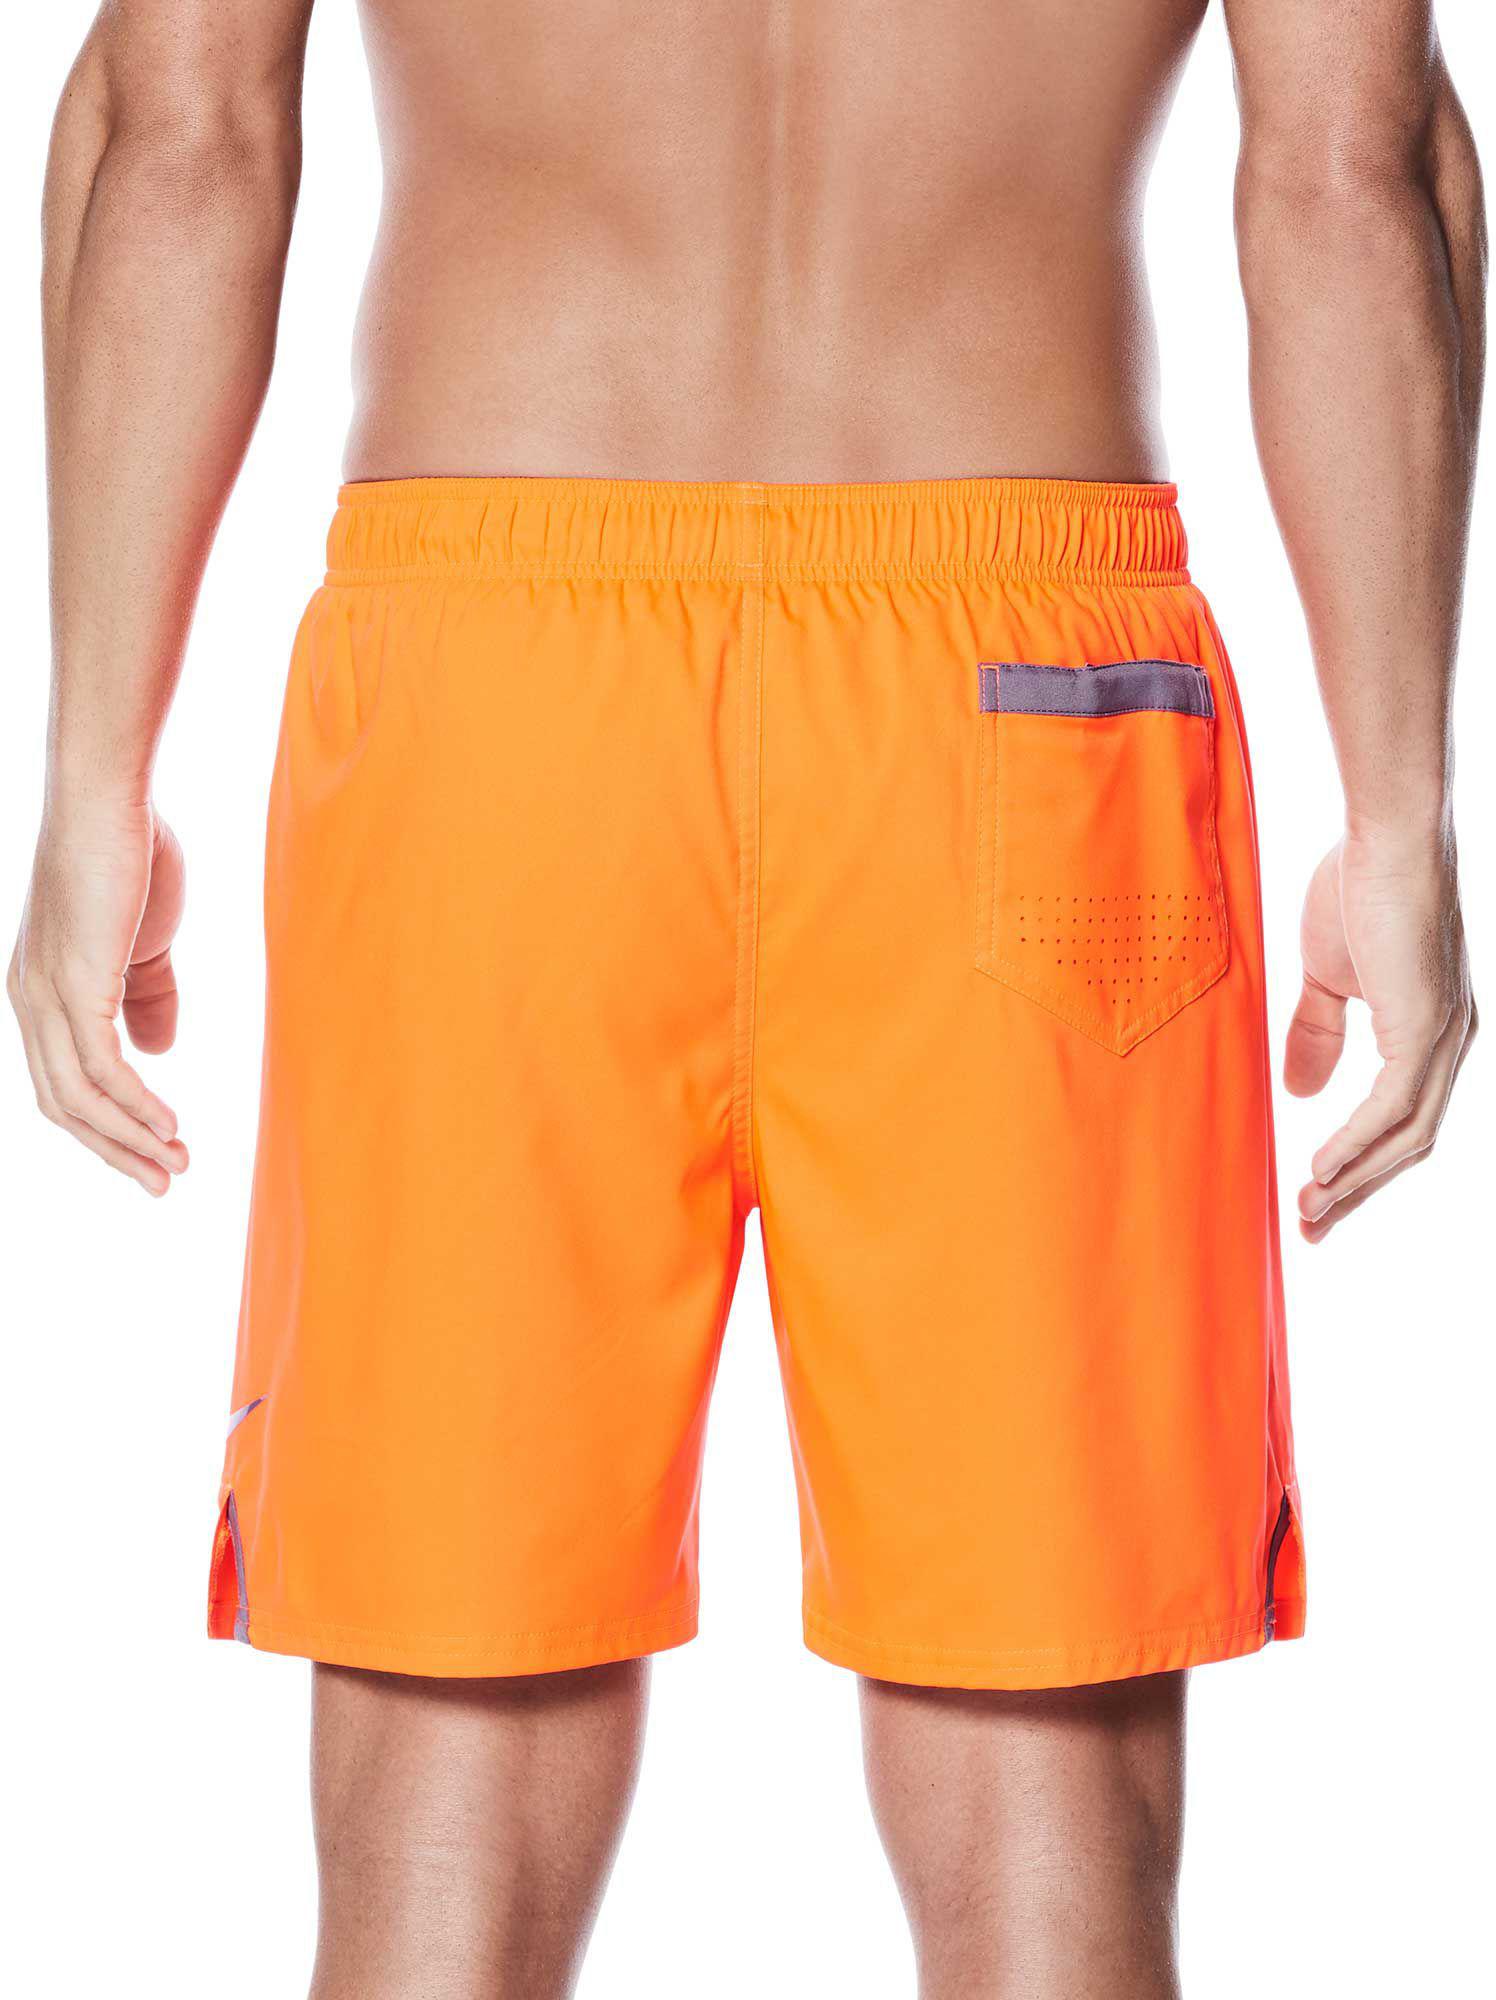 nike orange swim trunks